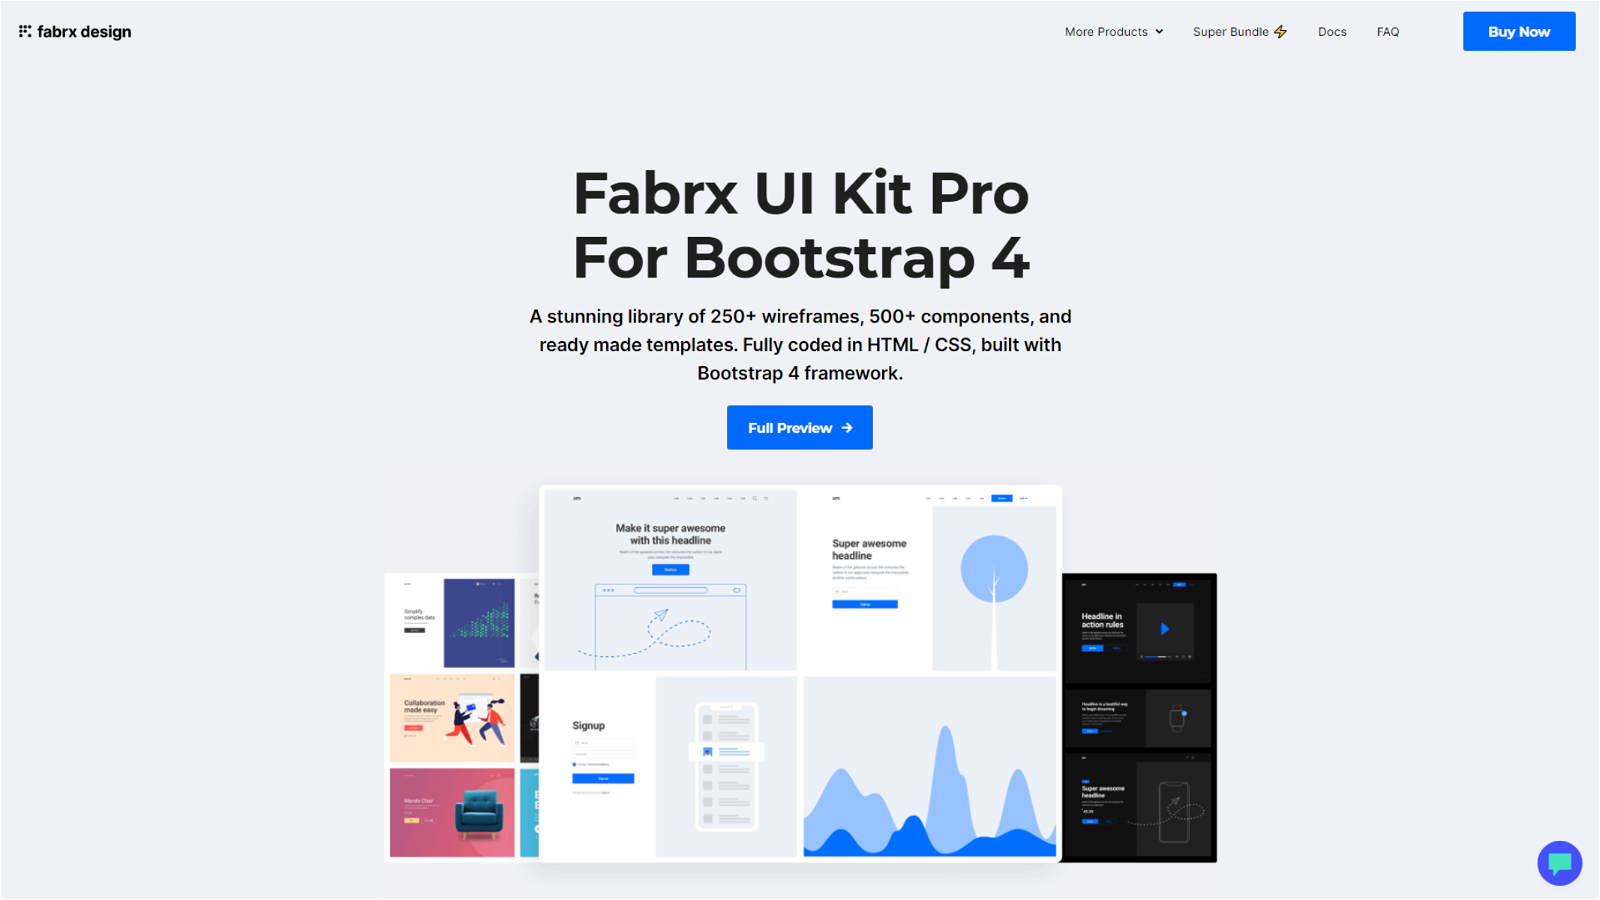 Fabrx UI kit